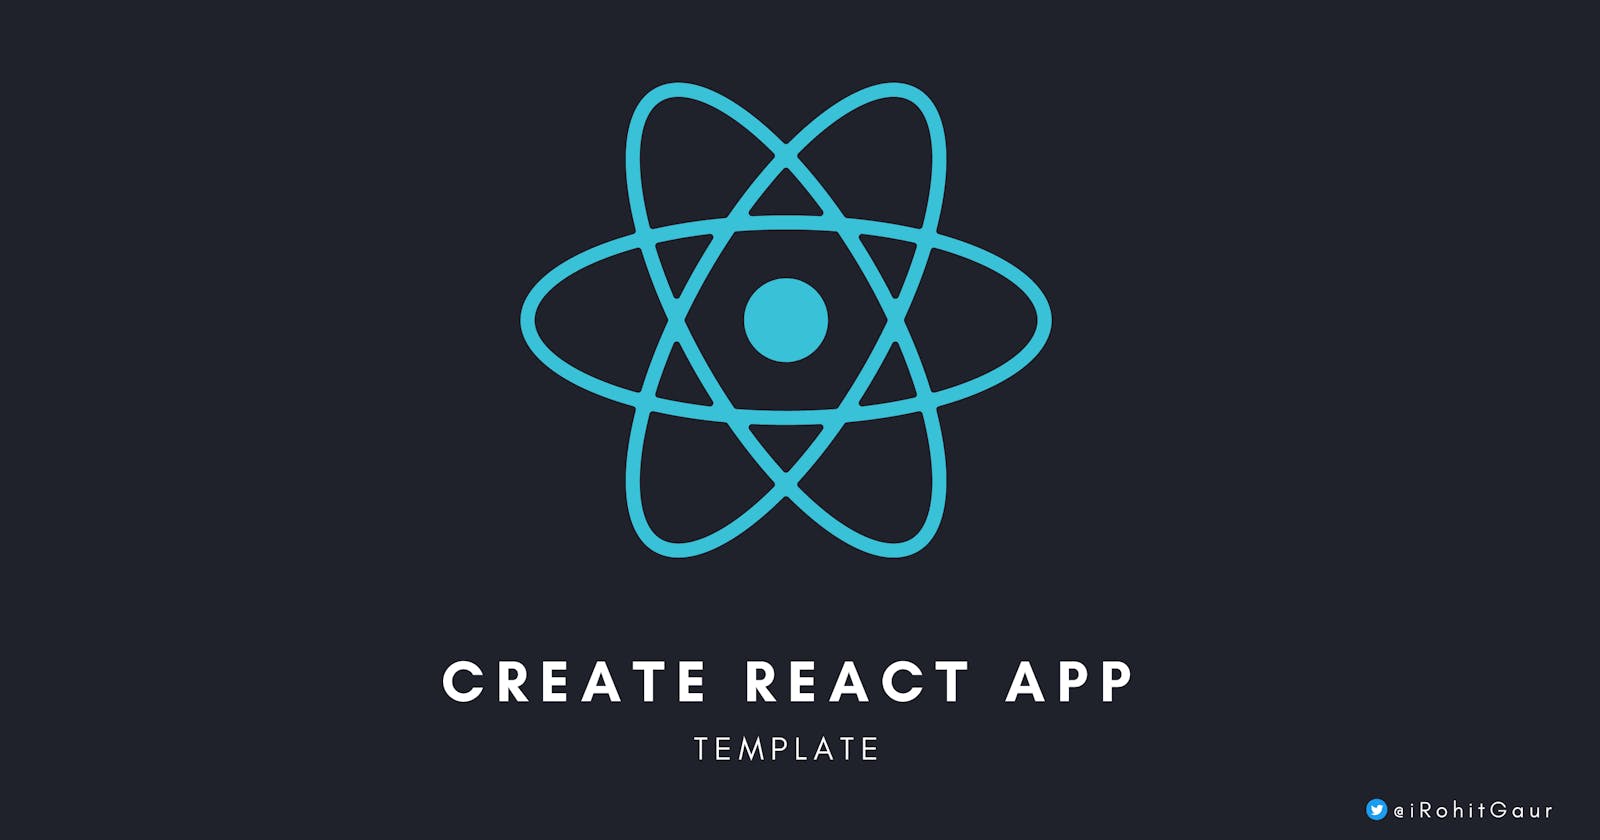 How to create a custom template for Create React App